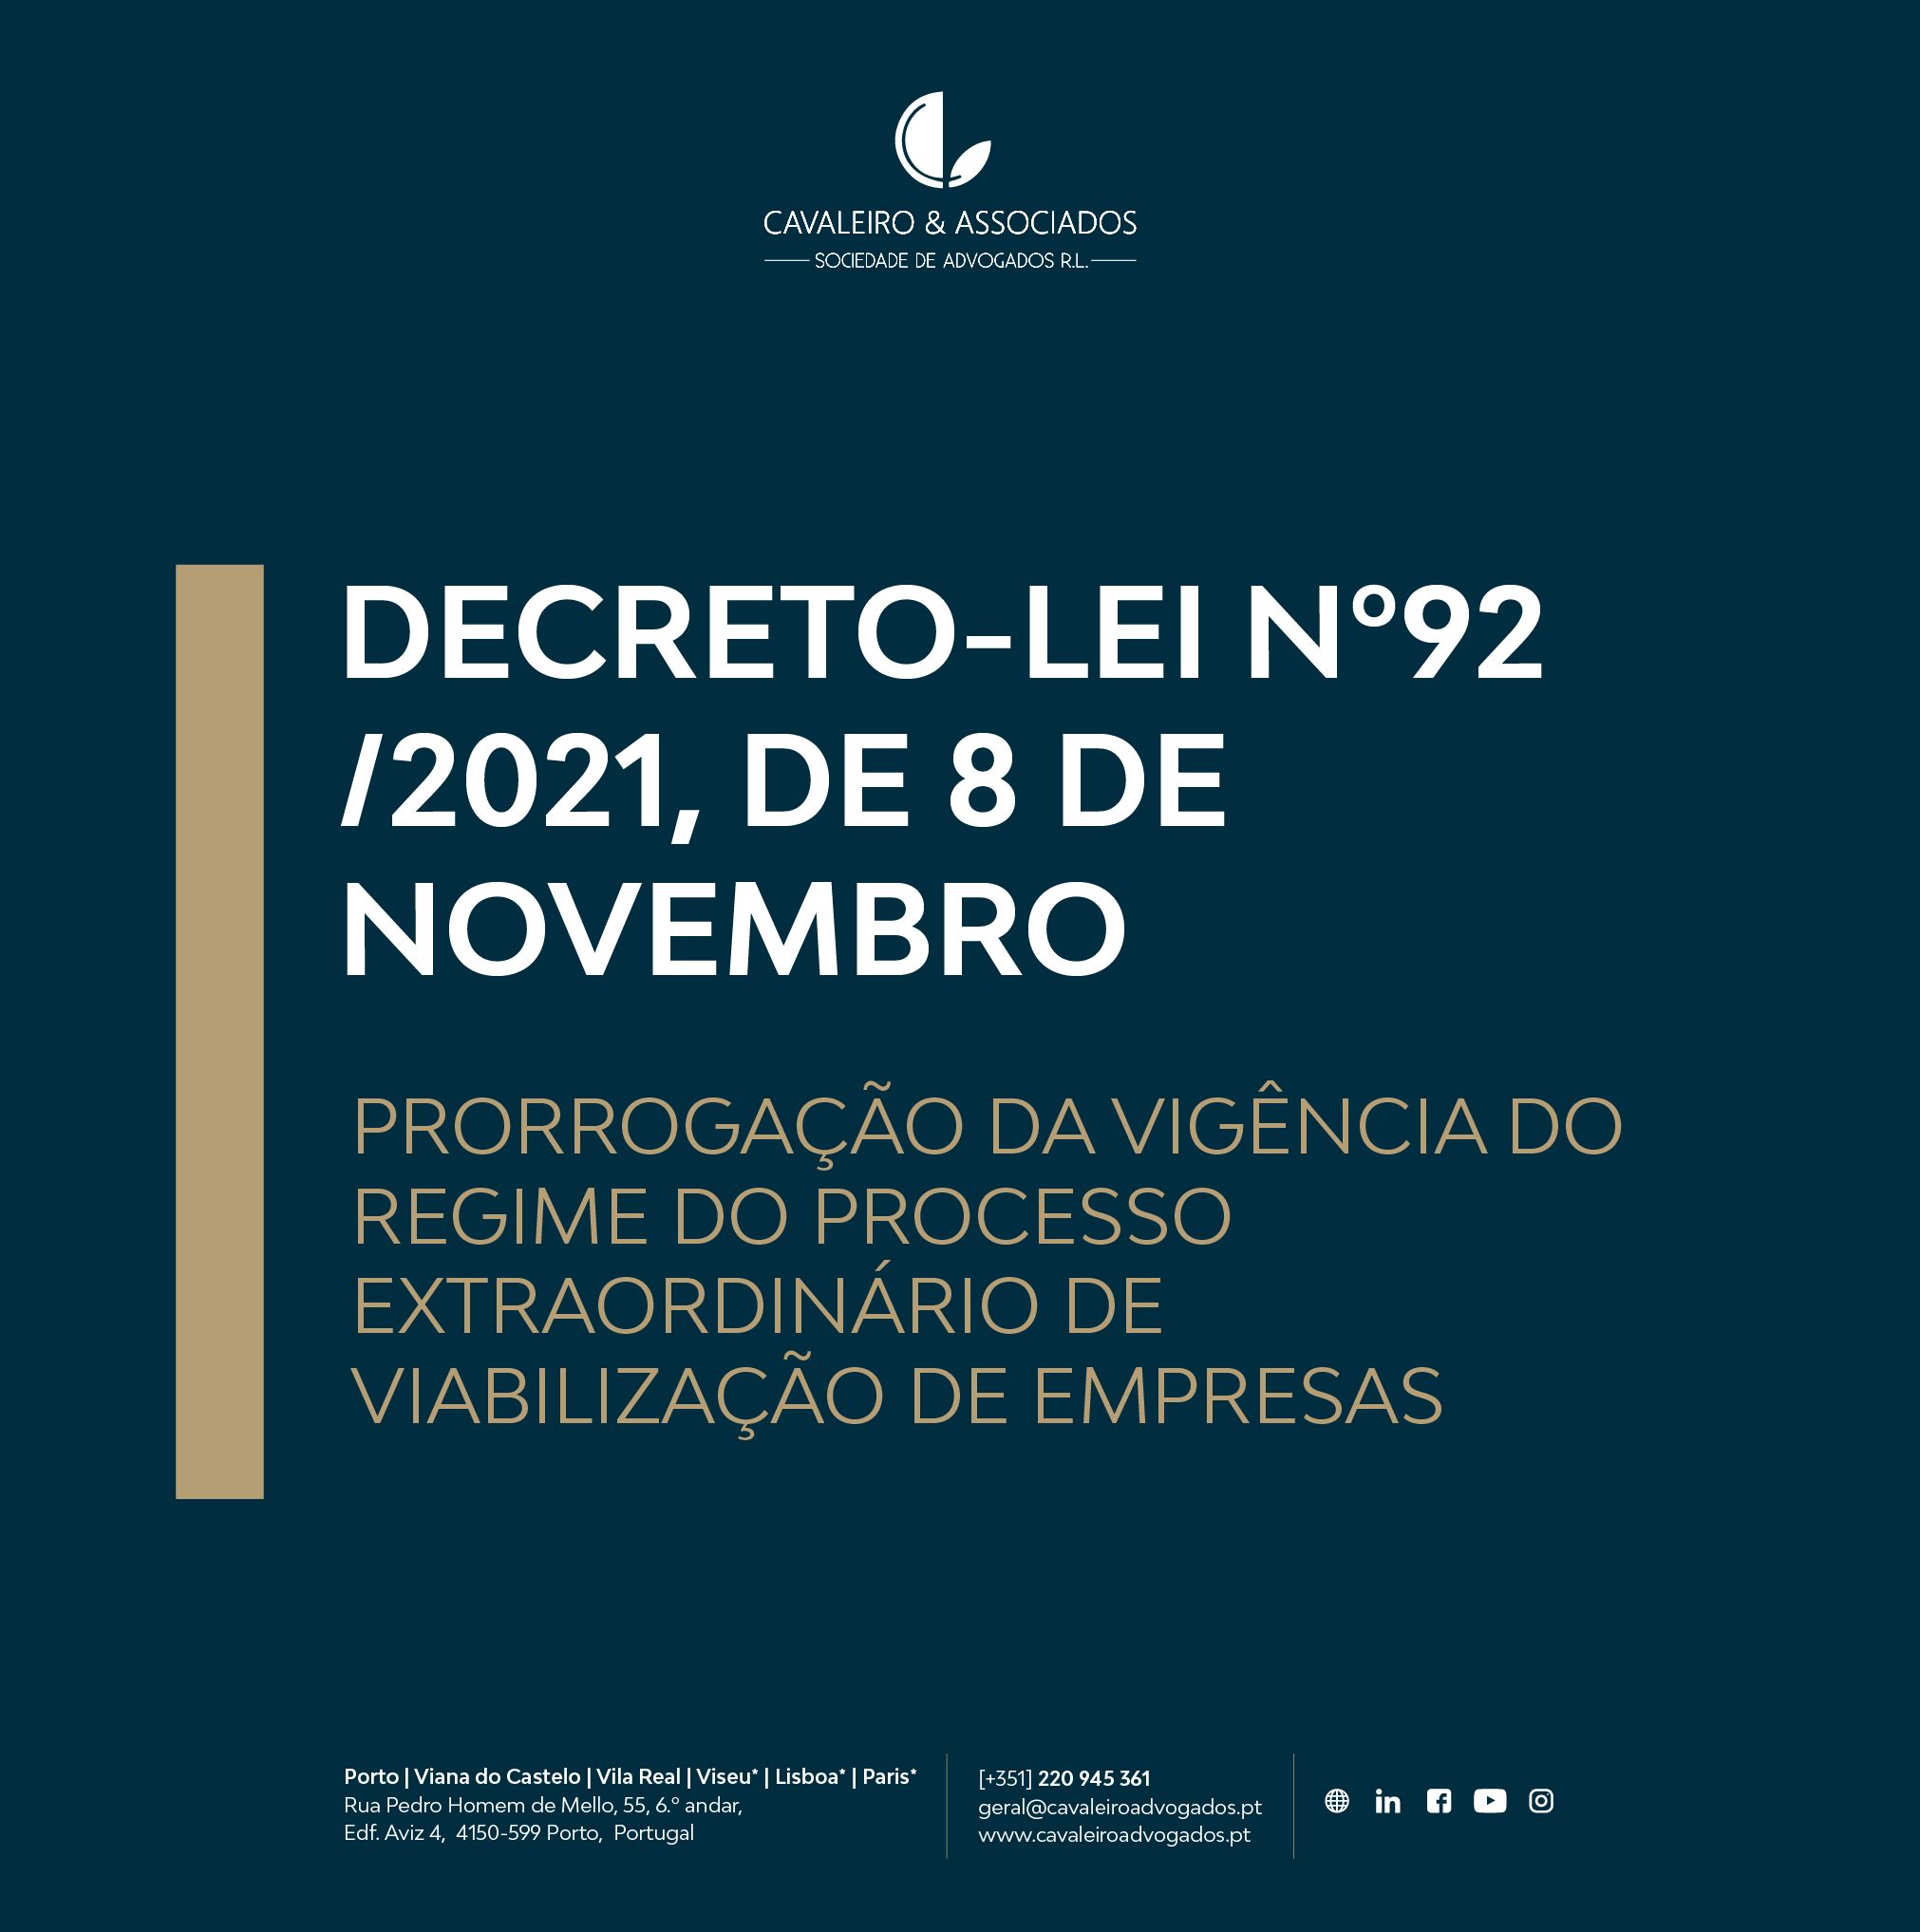 DECRETO-LEI N°92/2021, DE 8 DE NOVEMBRO